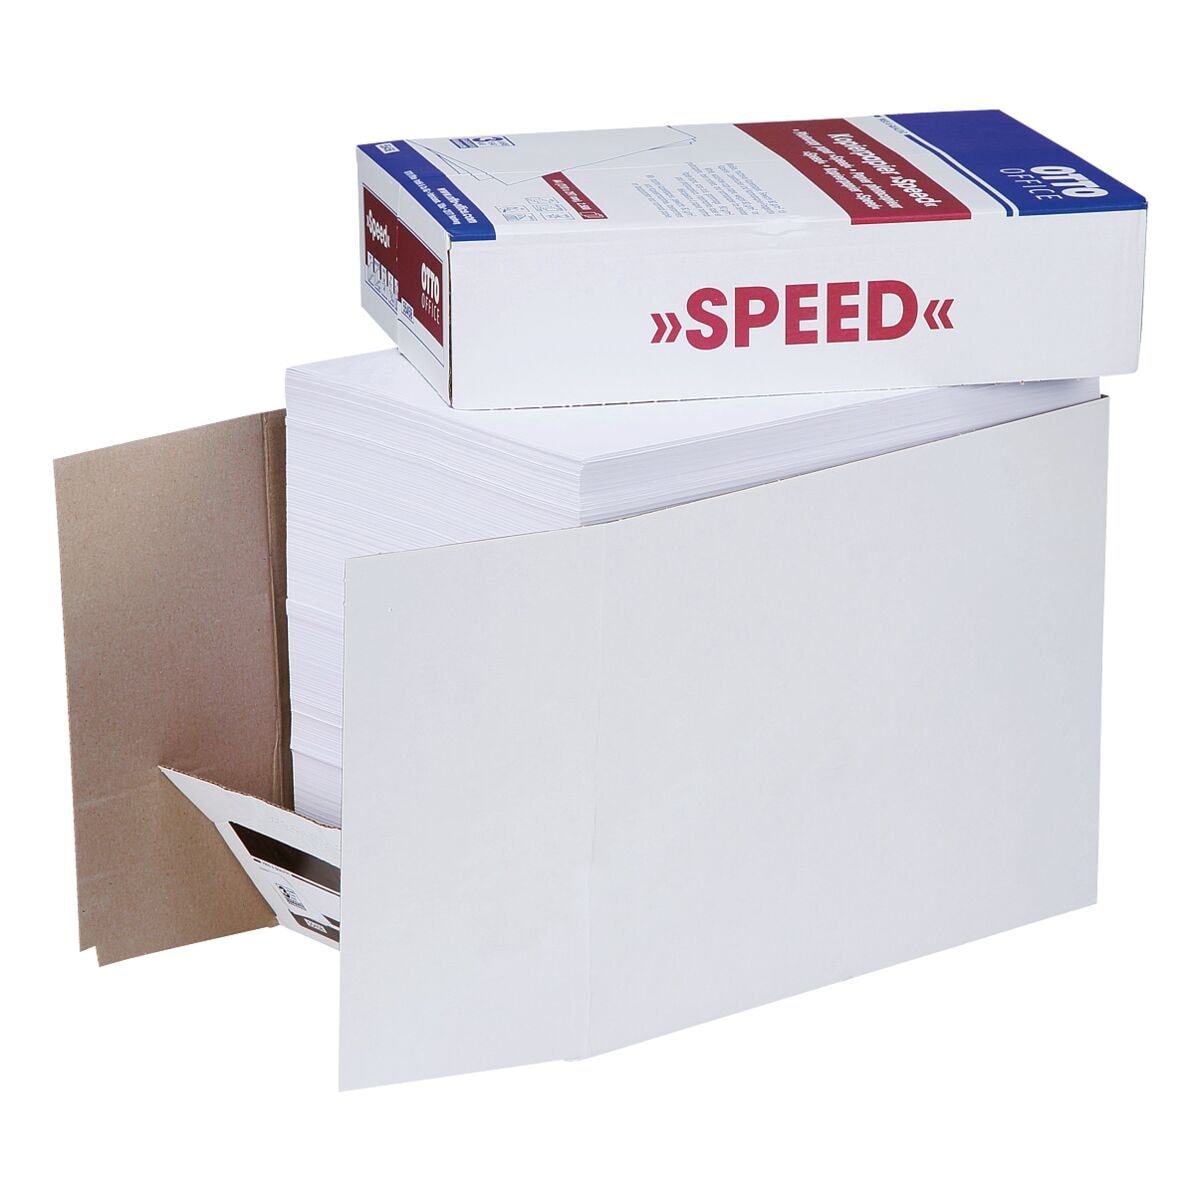 Öko-Box Kopierpapier A4 OTTO Office SPEED - 2500 Blatt gesamt, 80g/qm